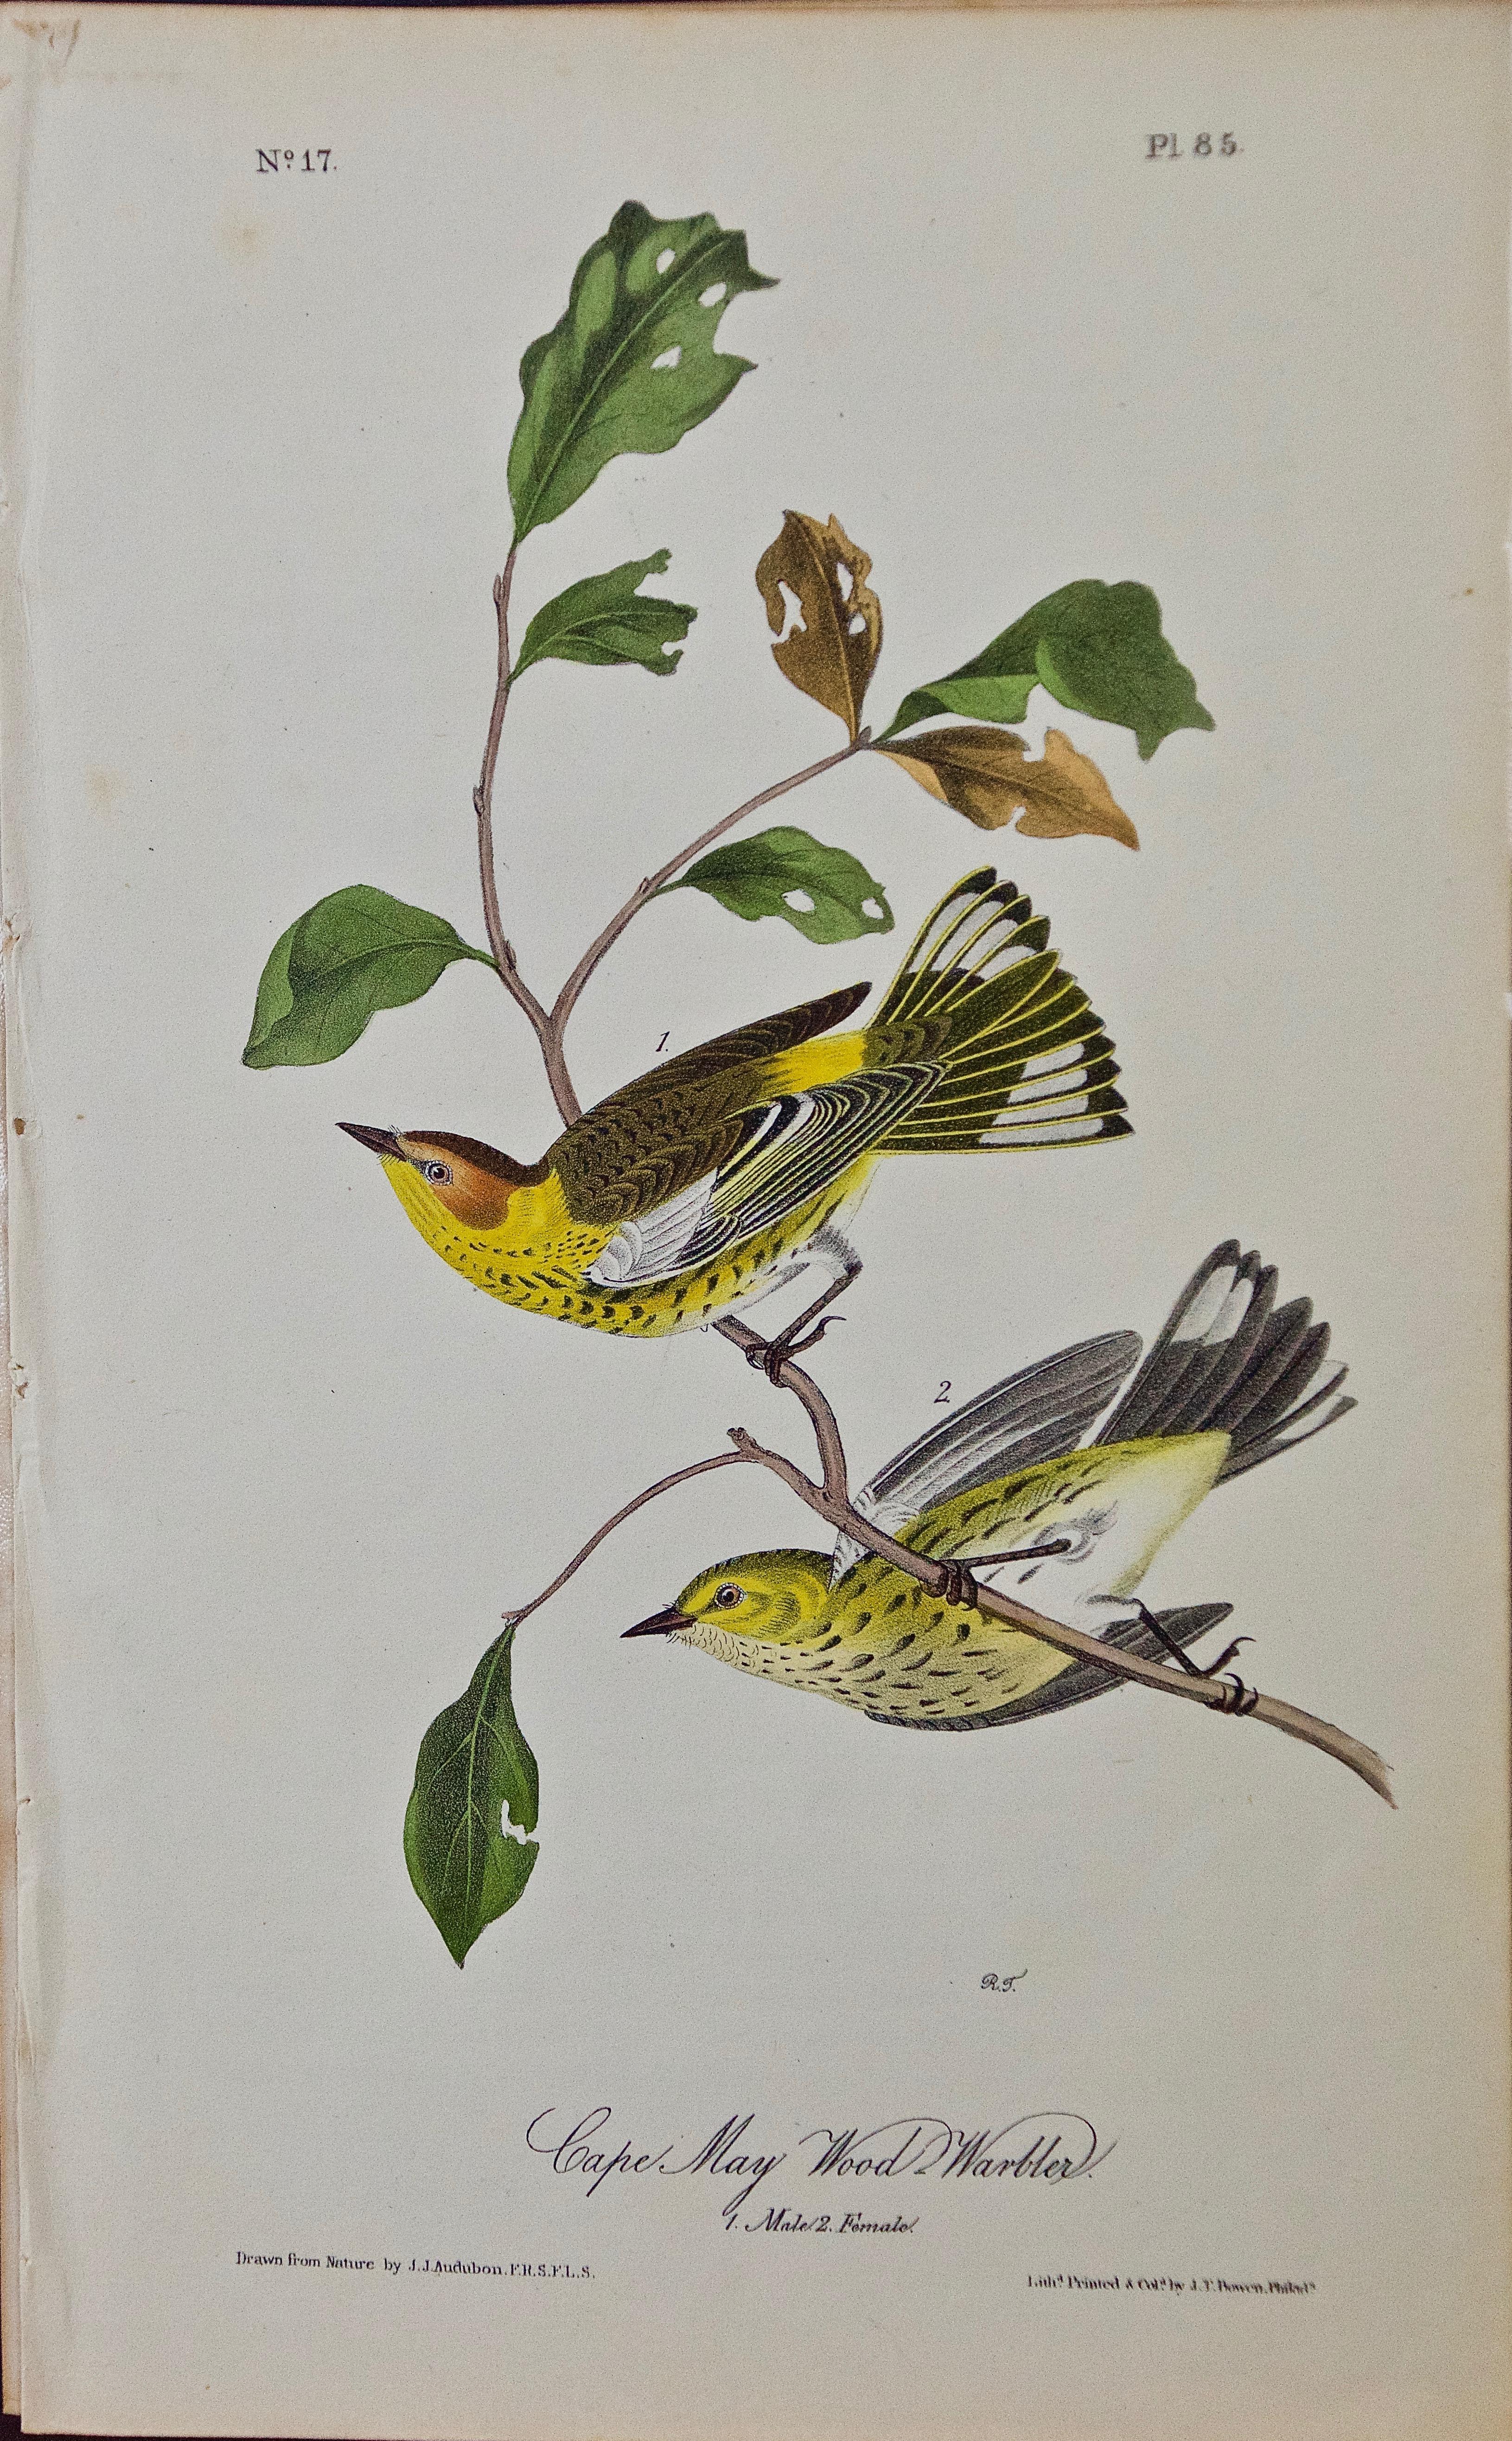 John James Audubon Animal Print - "Cape May Wood Warbler": Original First Edition Audubon Hand-colored Lithograph 